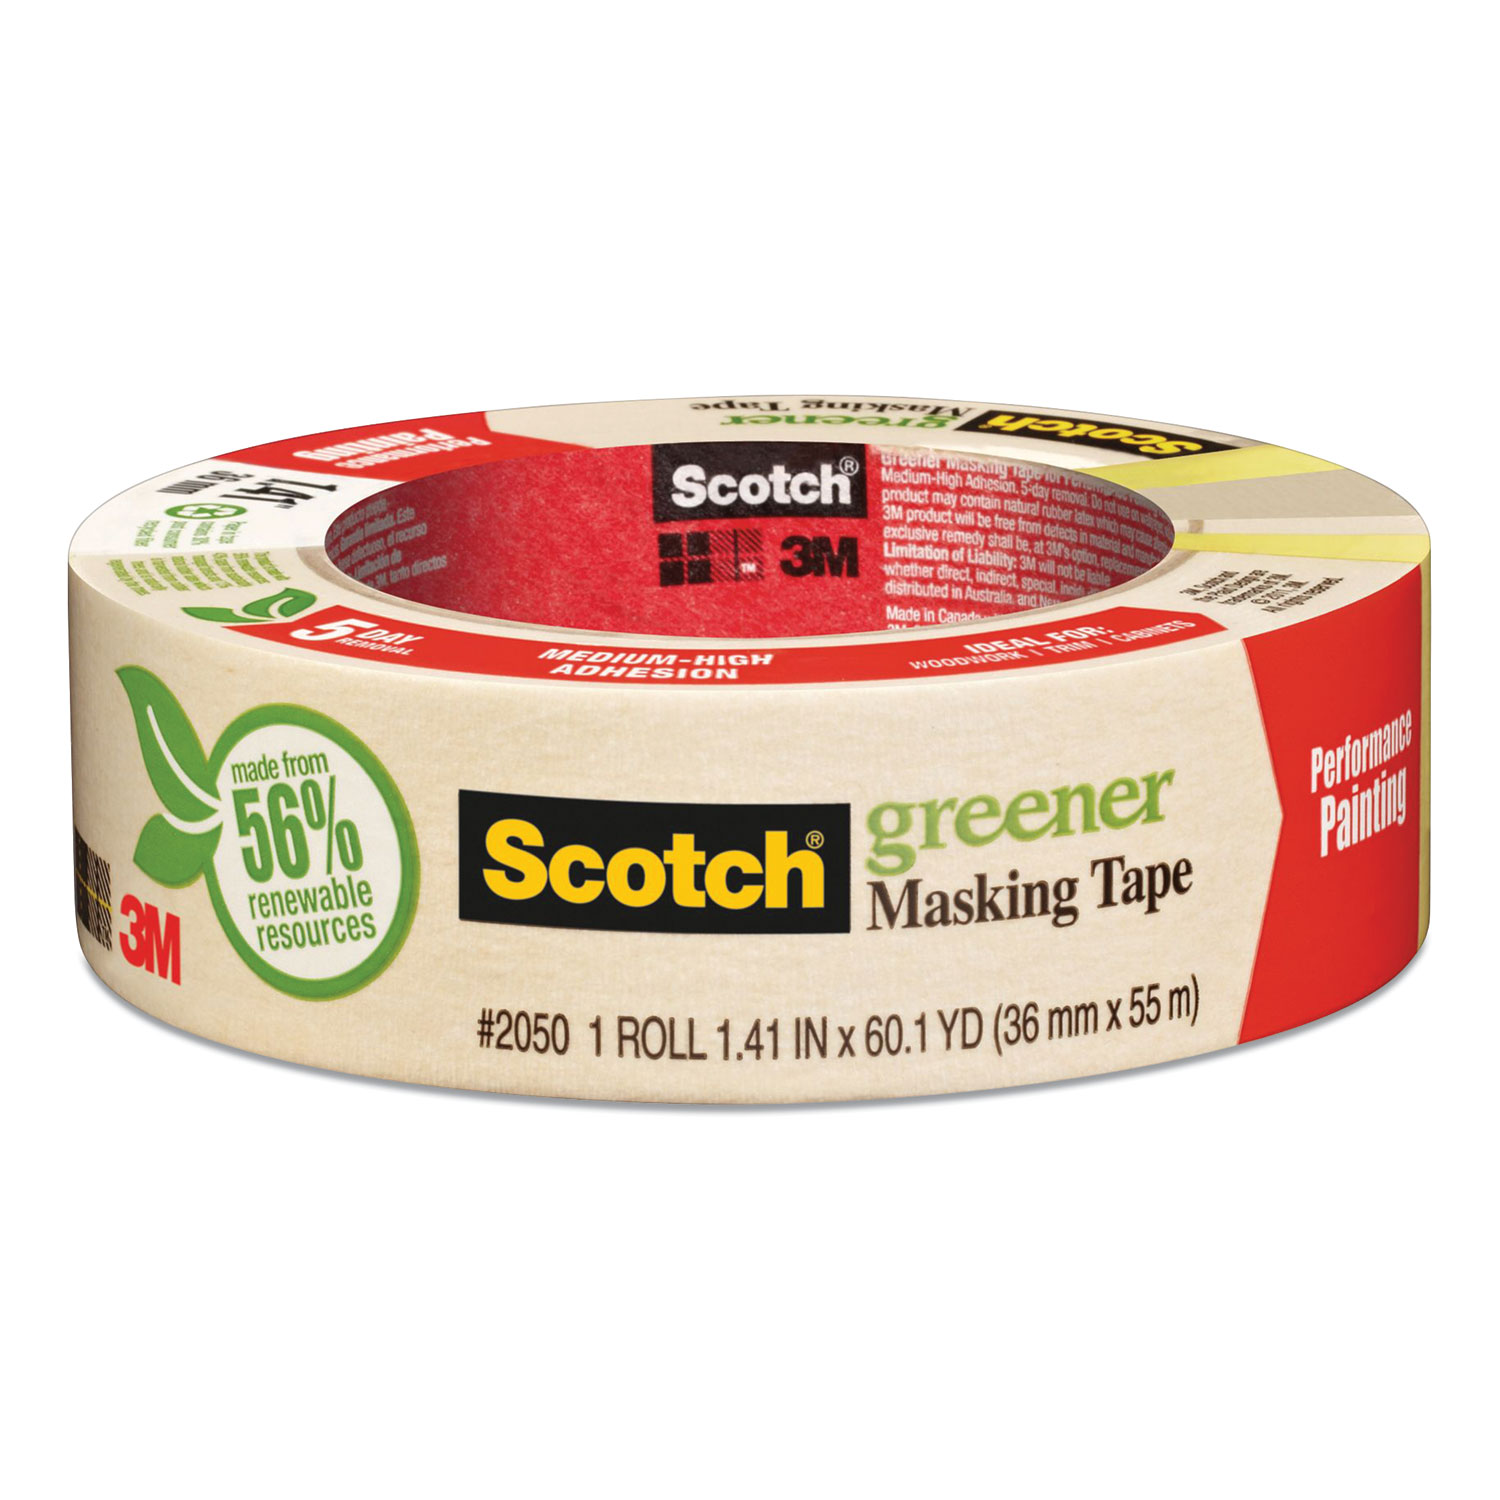 Scotch® Greener Masking Tape 2050, 3 Core, 1.41 x 60 yds, Beige